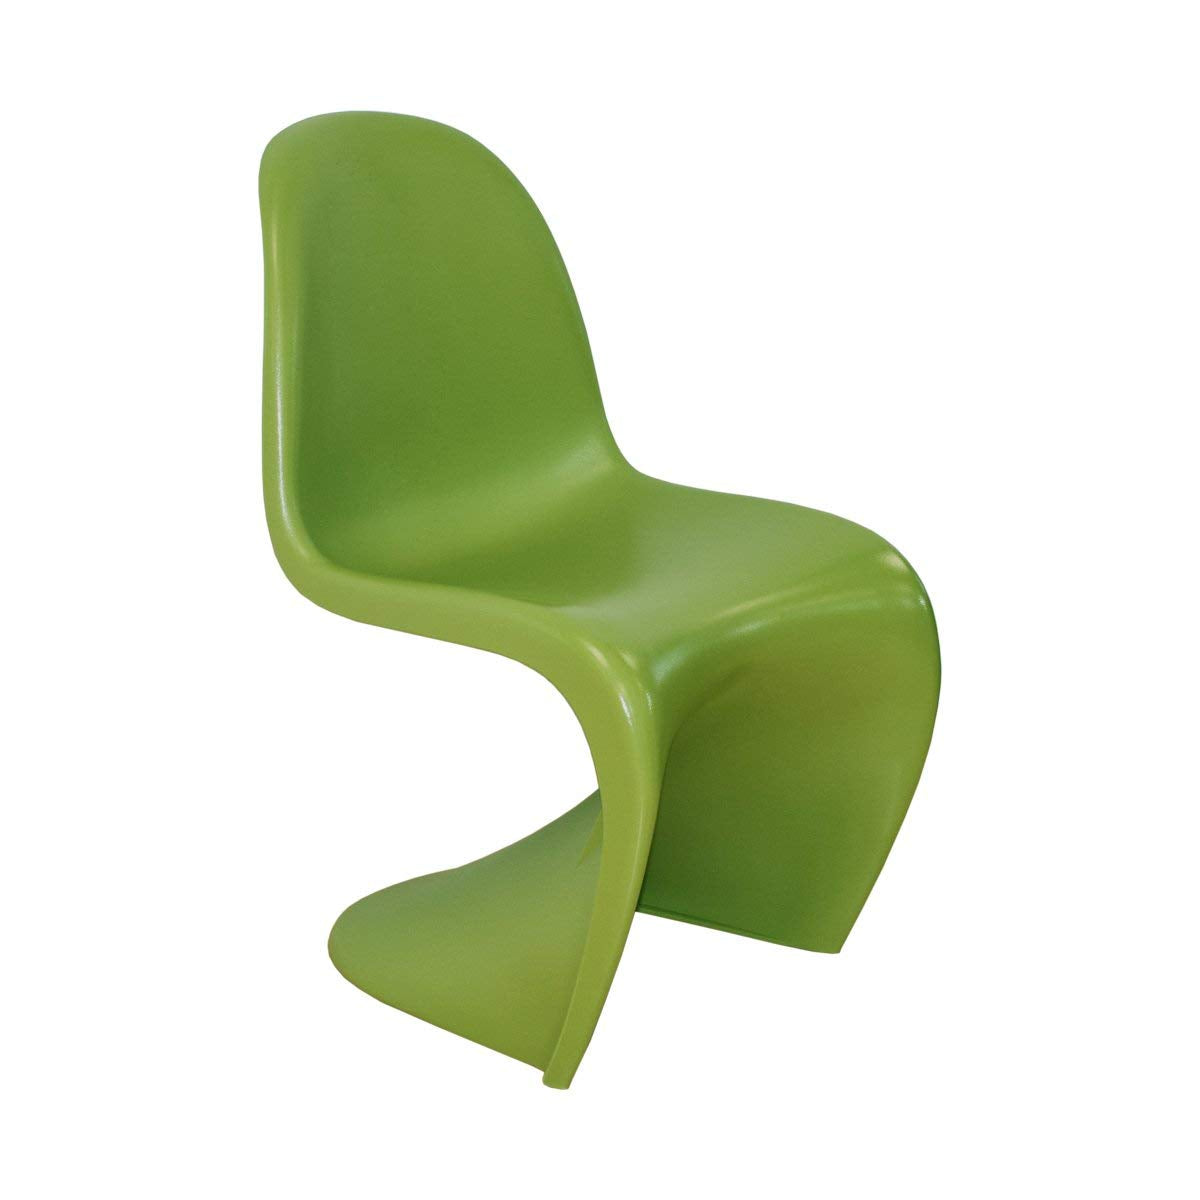 Mod Made Mm-pc-011-green S Shape Chair